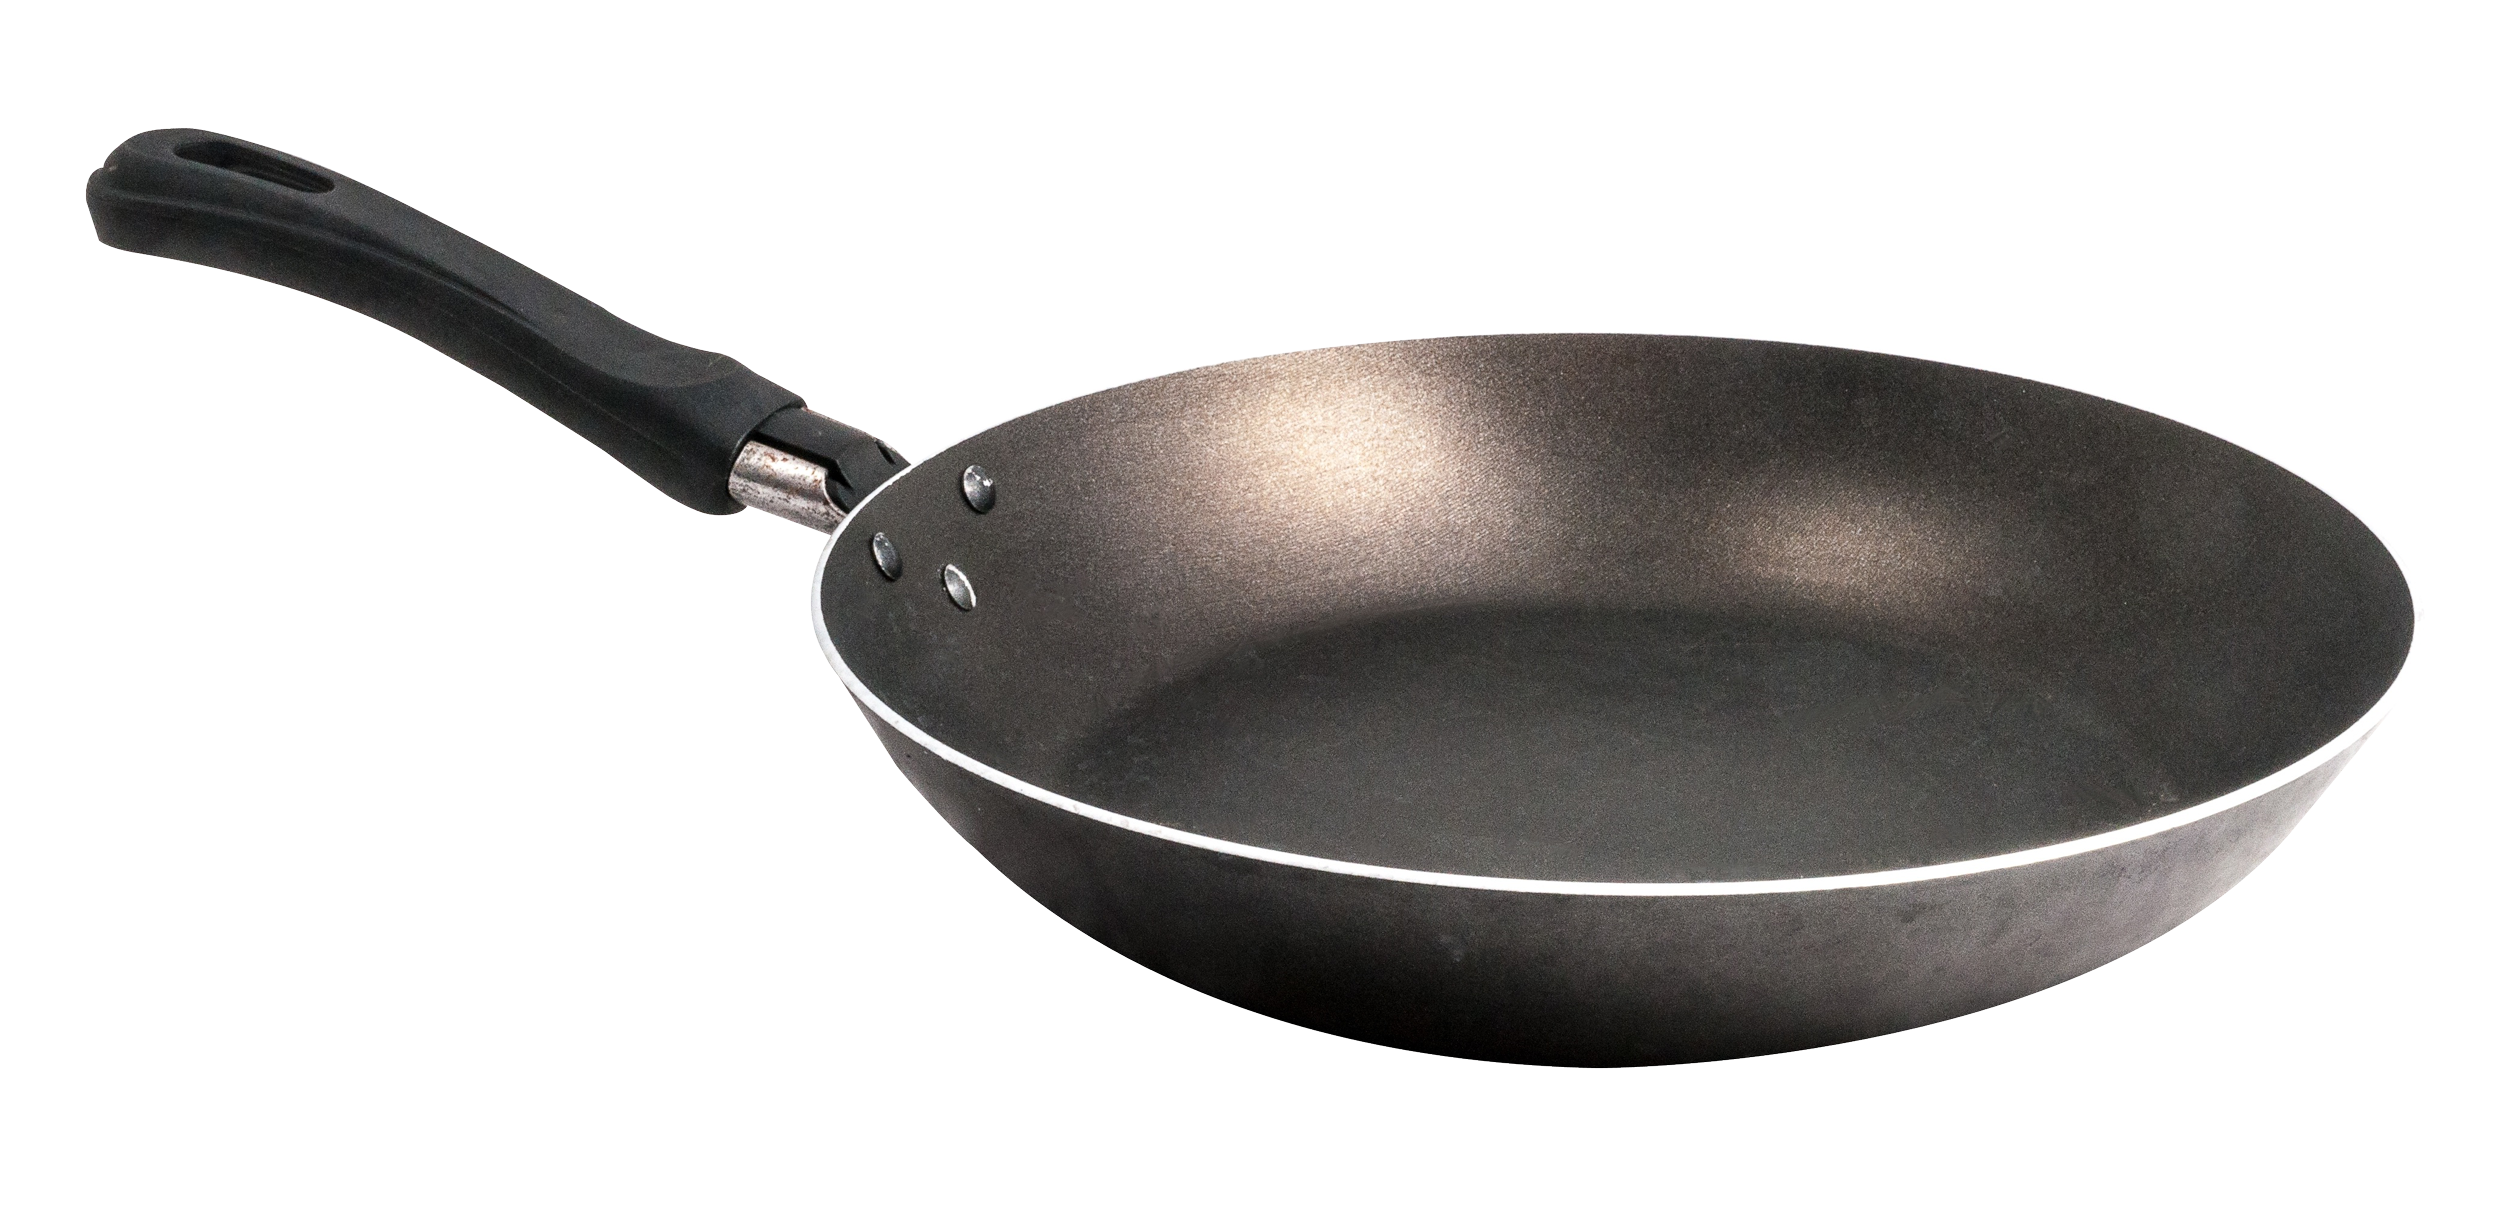 Frying Pan by Lersveen PlusPn